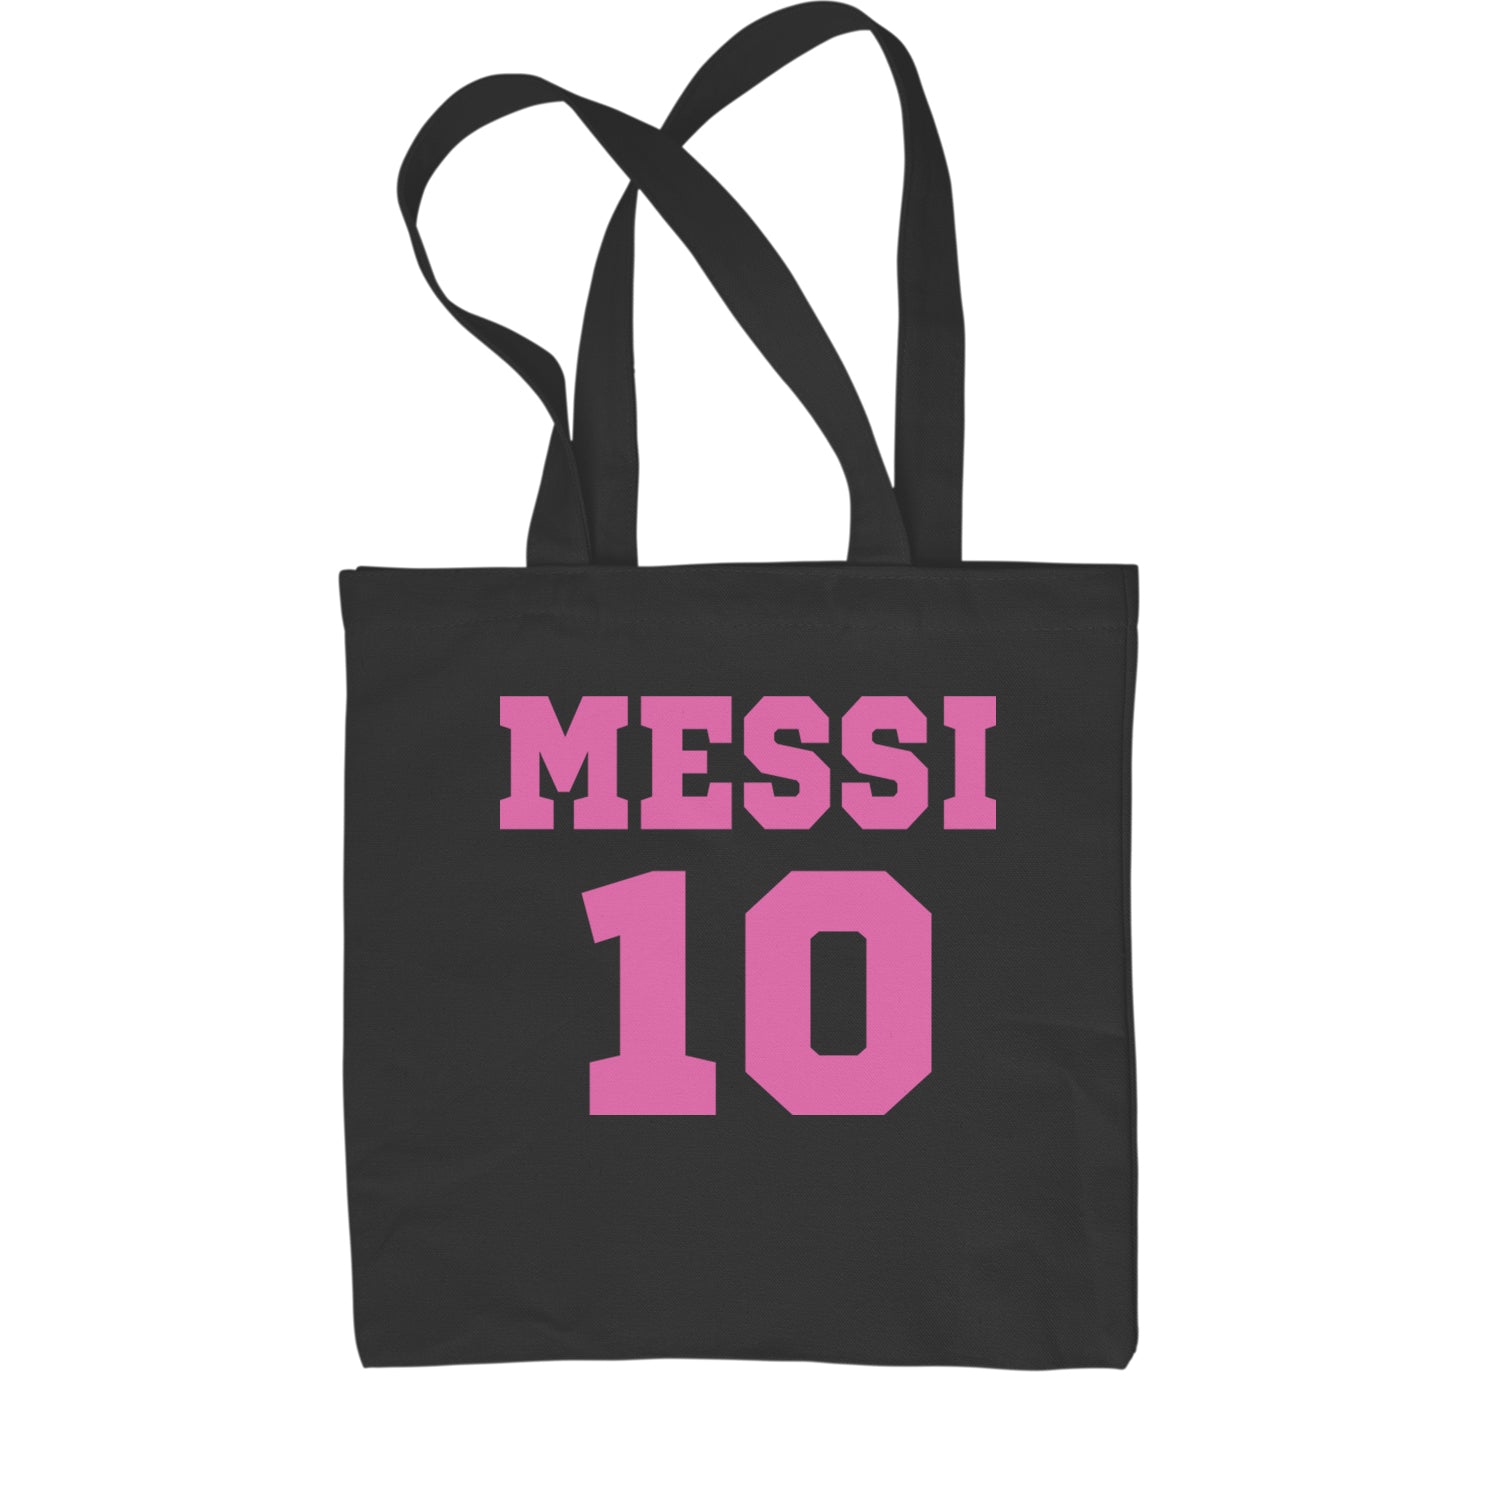 Messi World Soccer Futbol Messiami Shopping Tote Bag